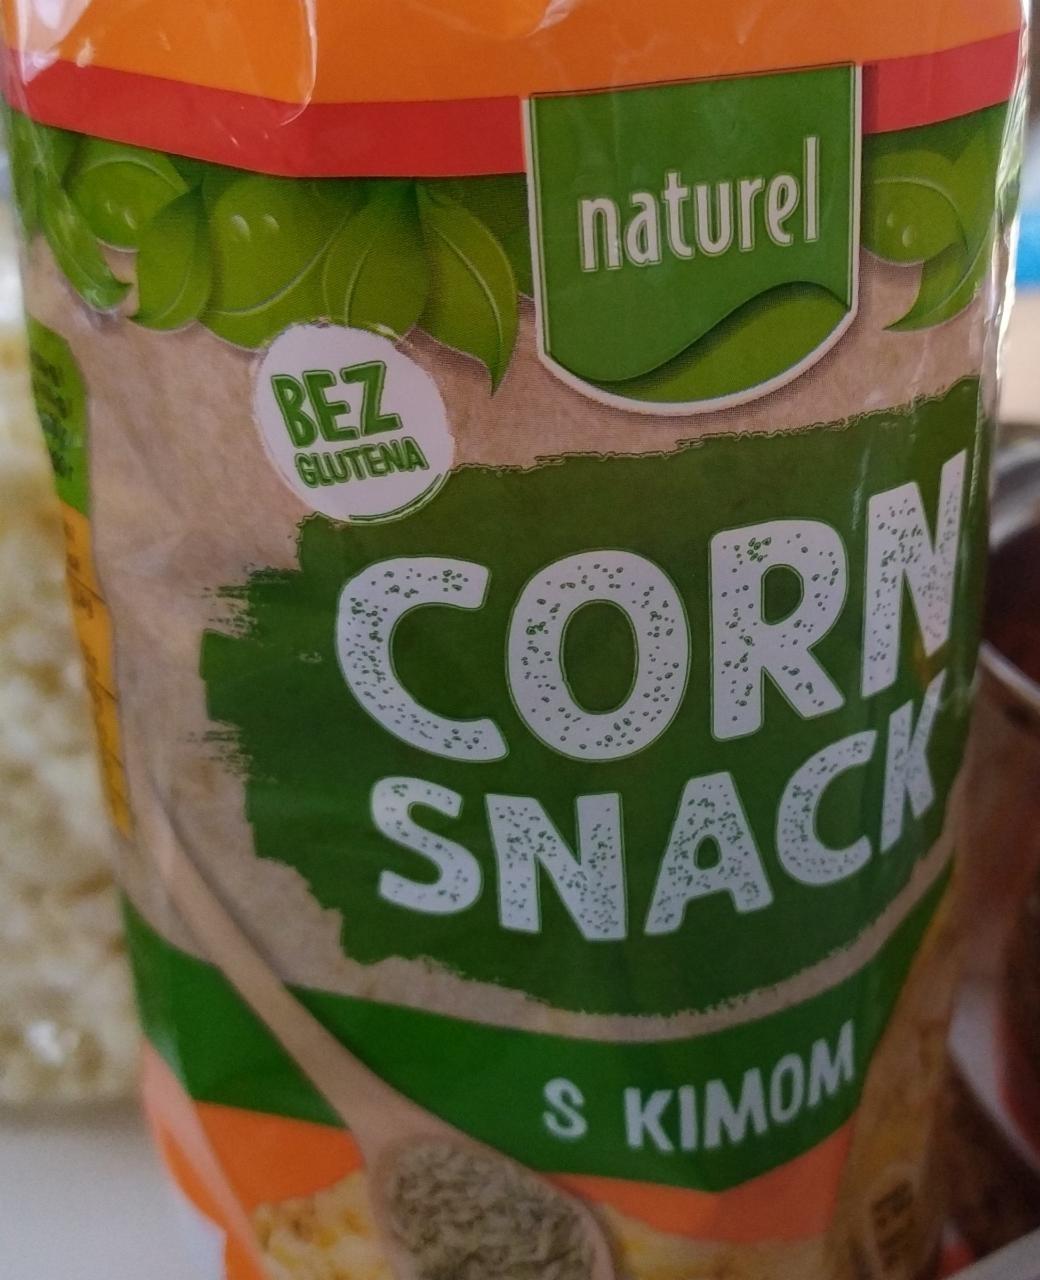 Fotografie - Corn Snack s kimom bez glutena Naturel